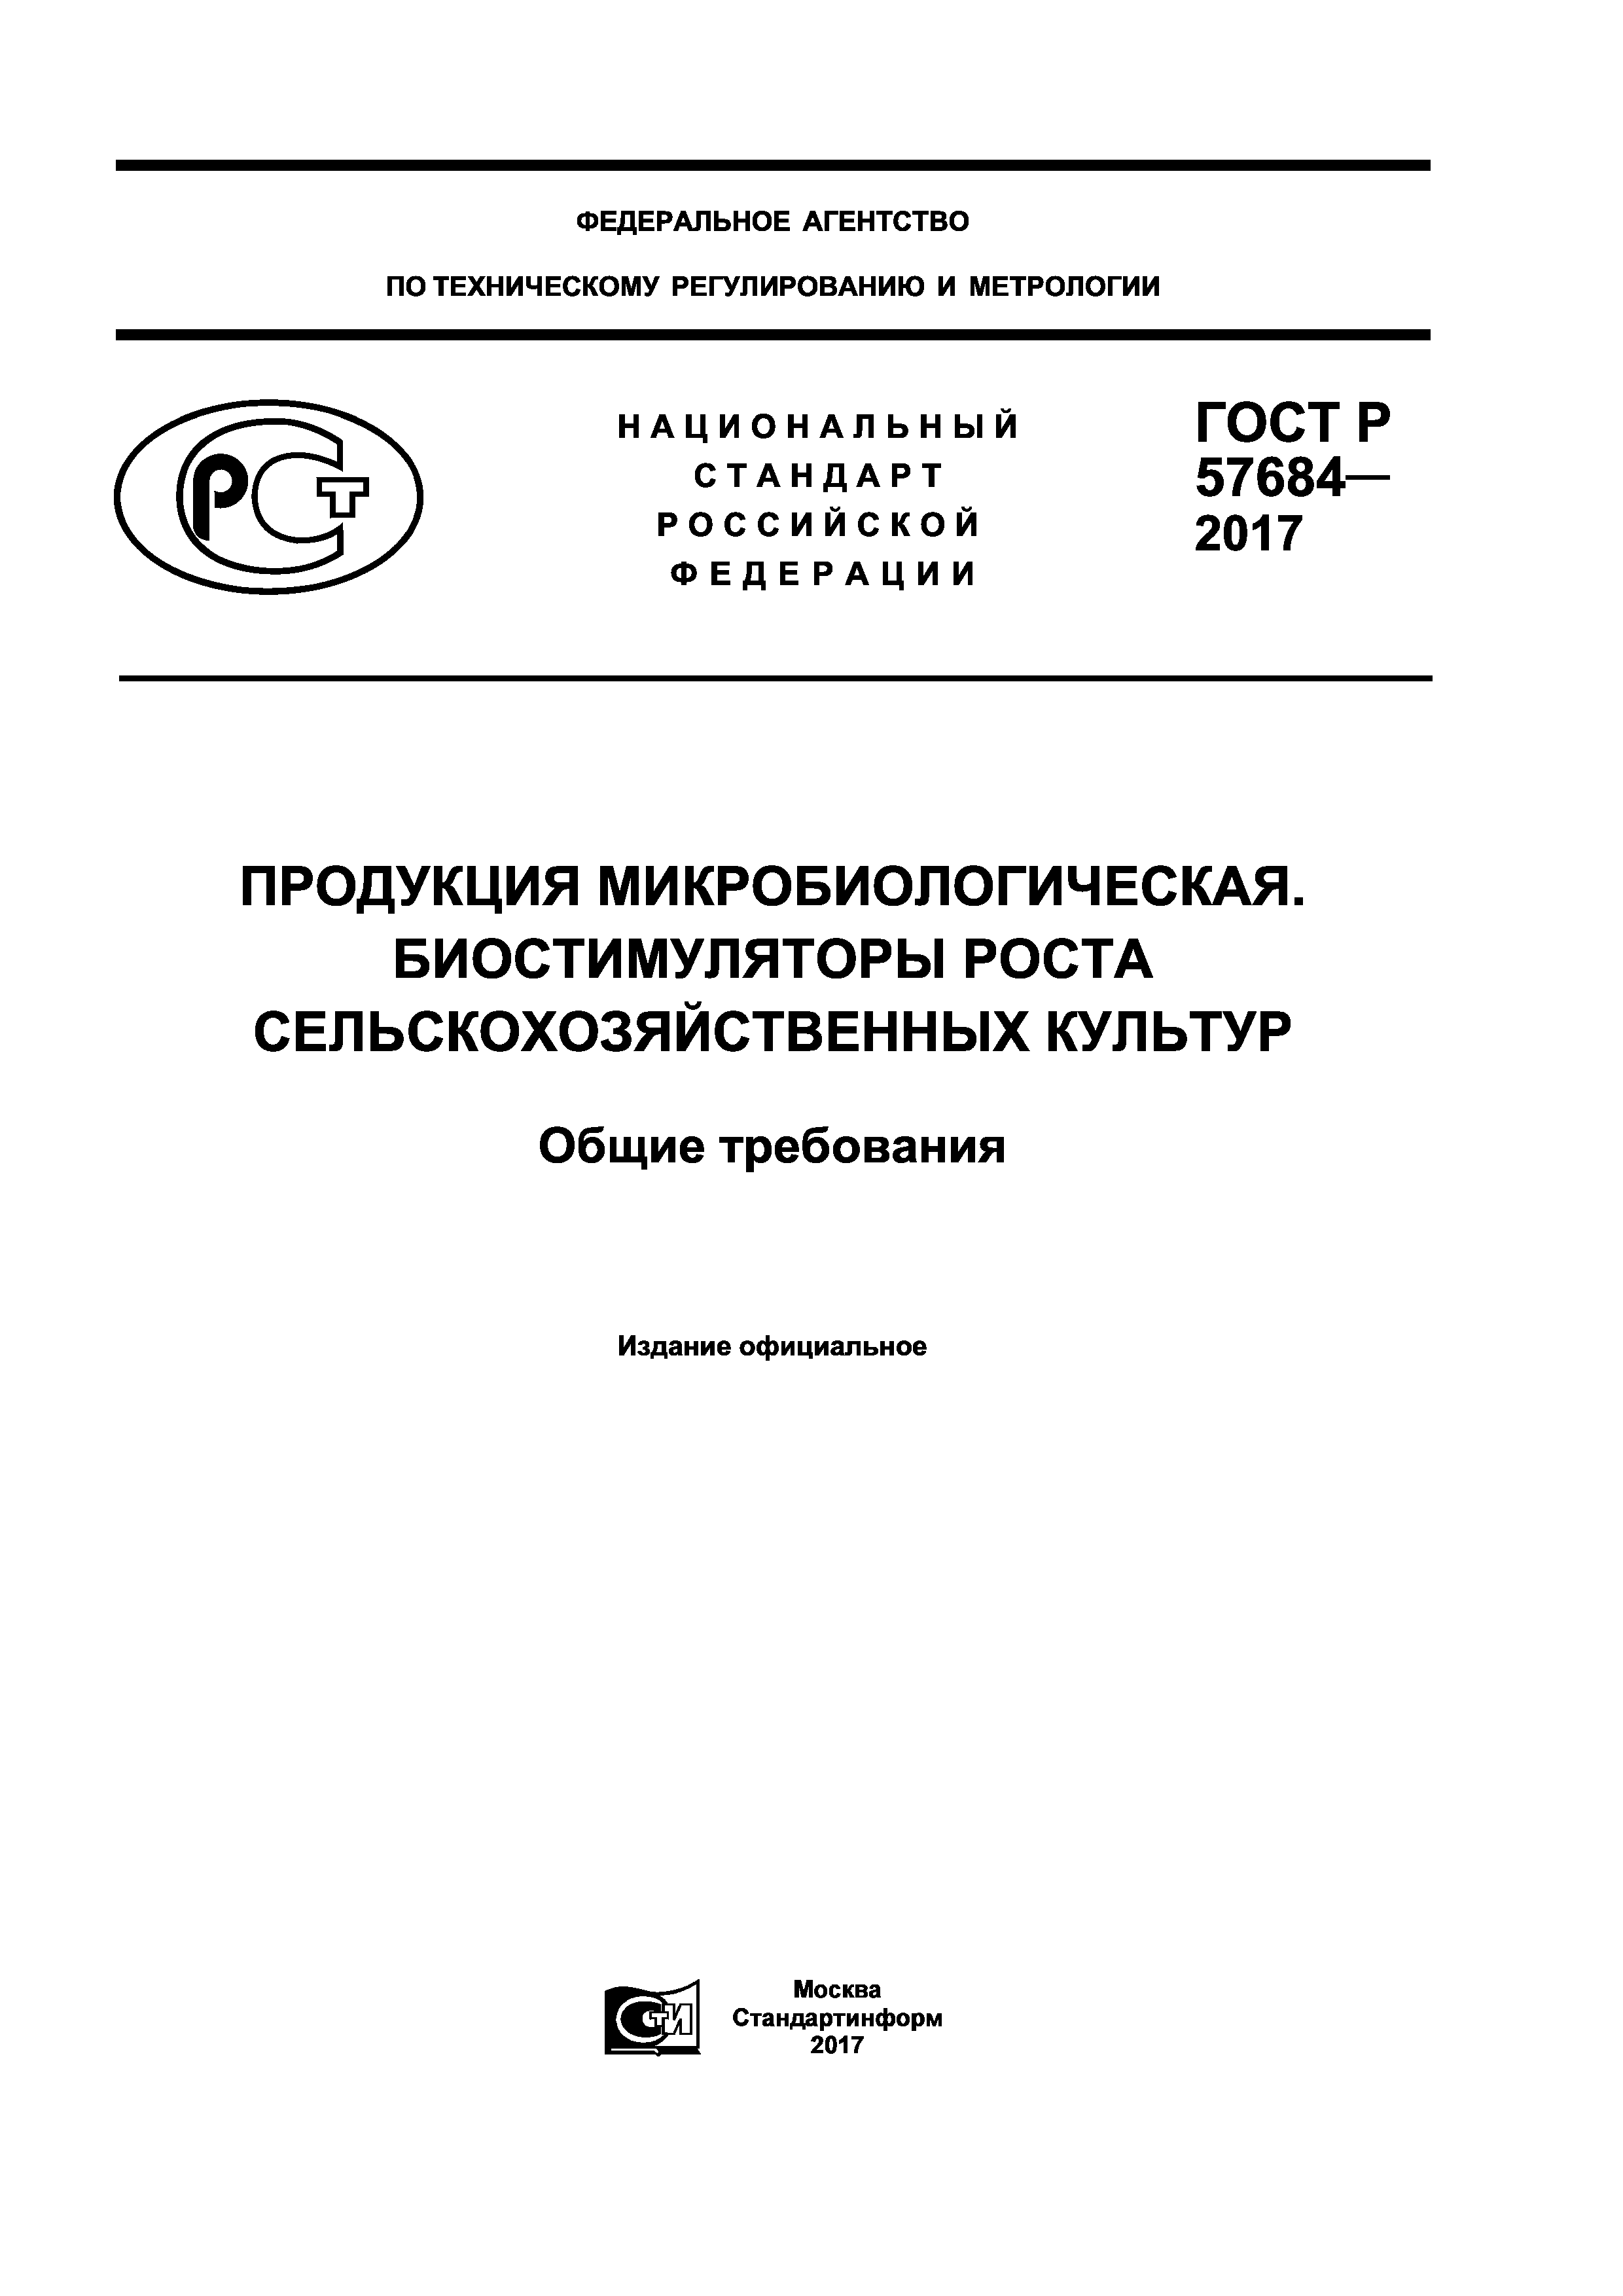 ГОСТ Р 57684-2017